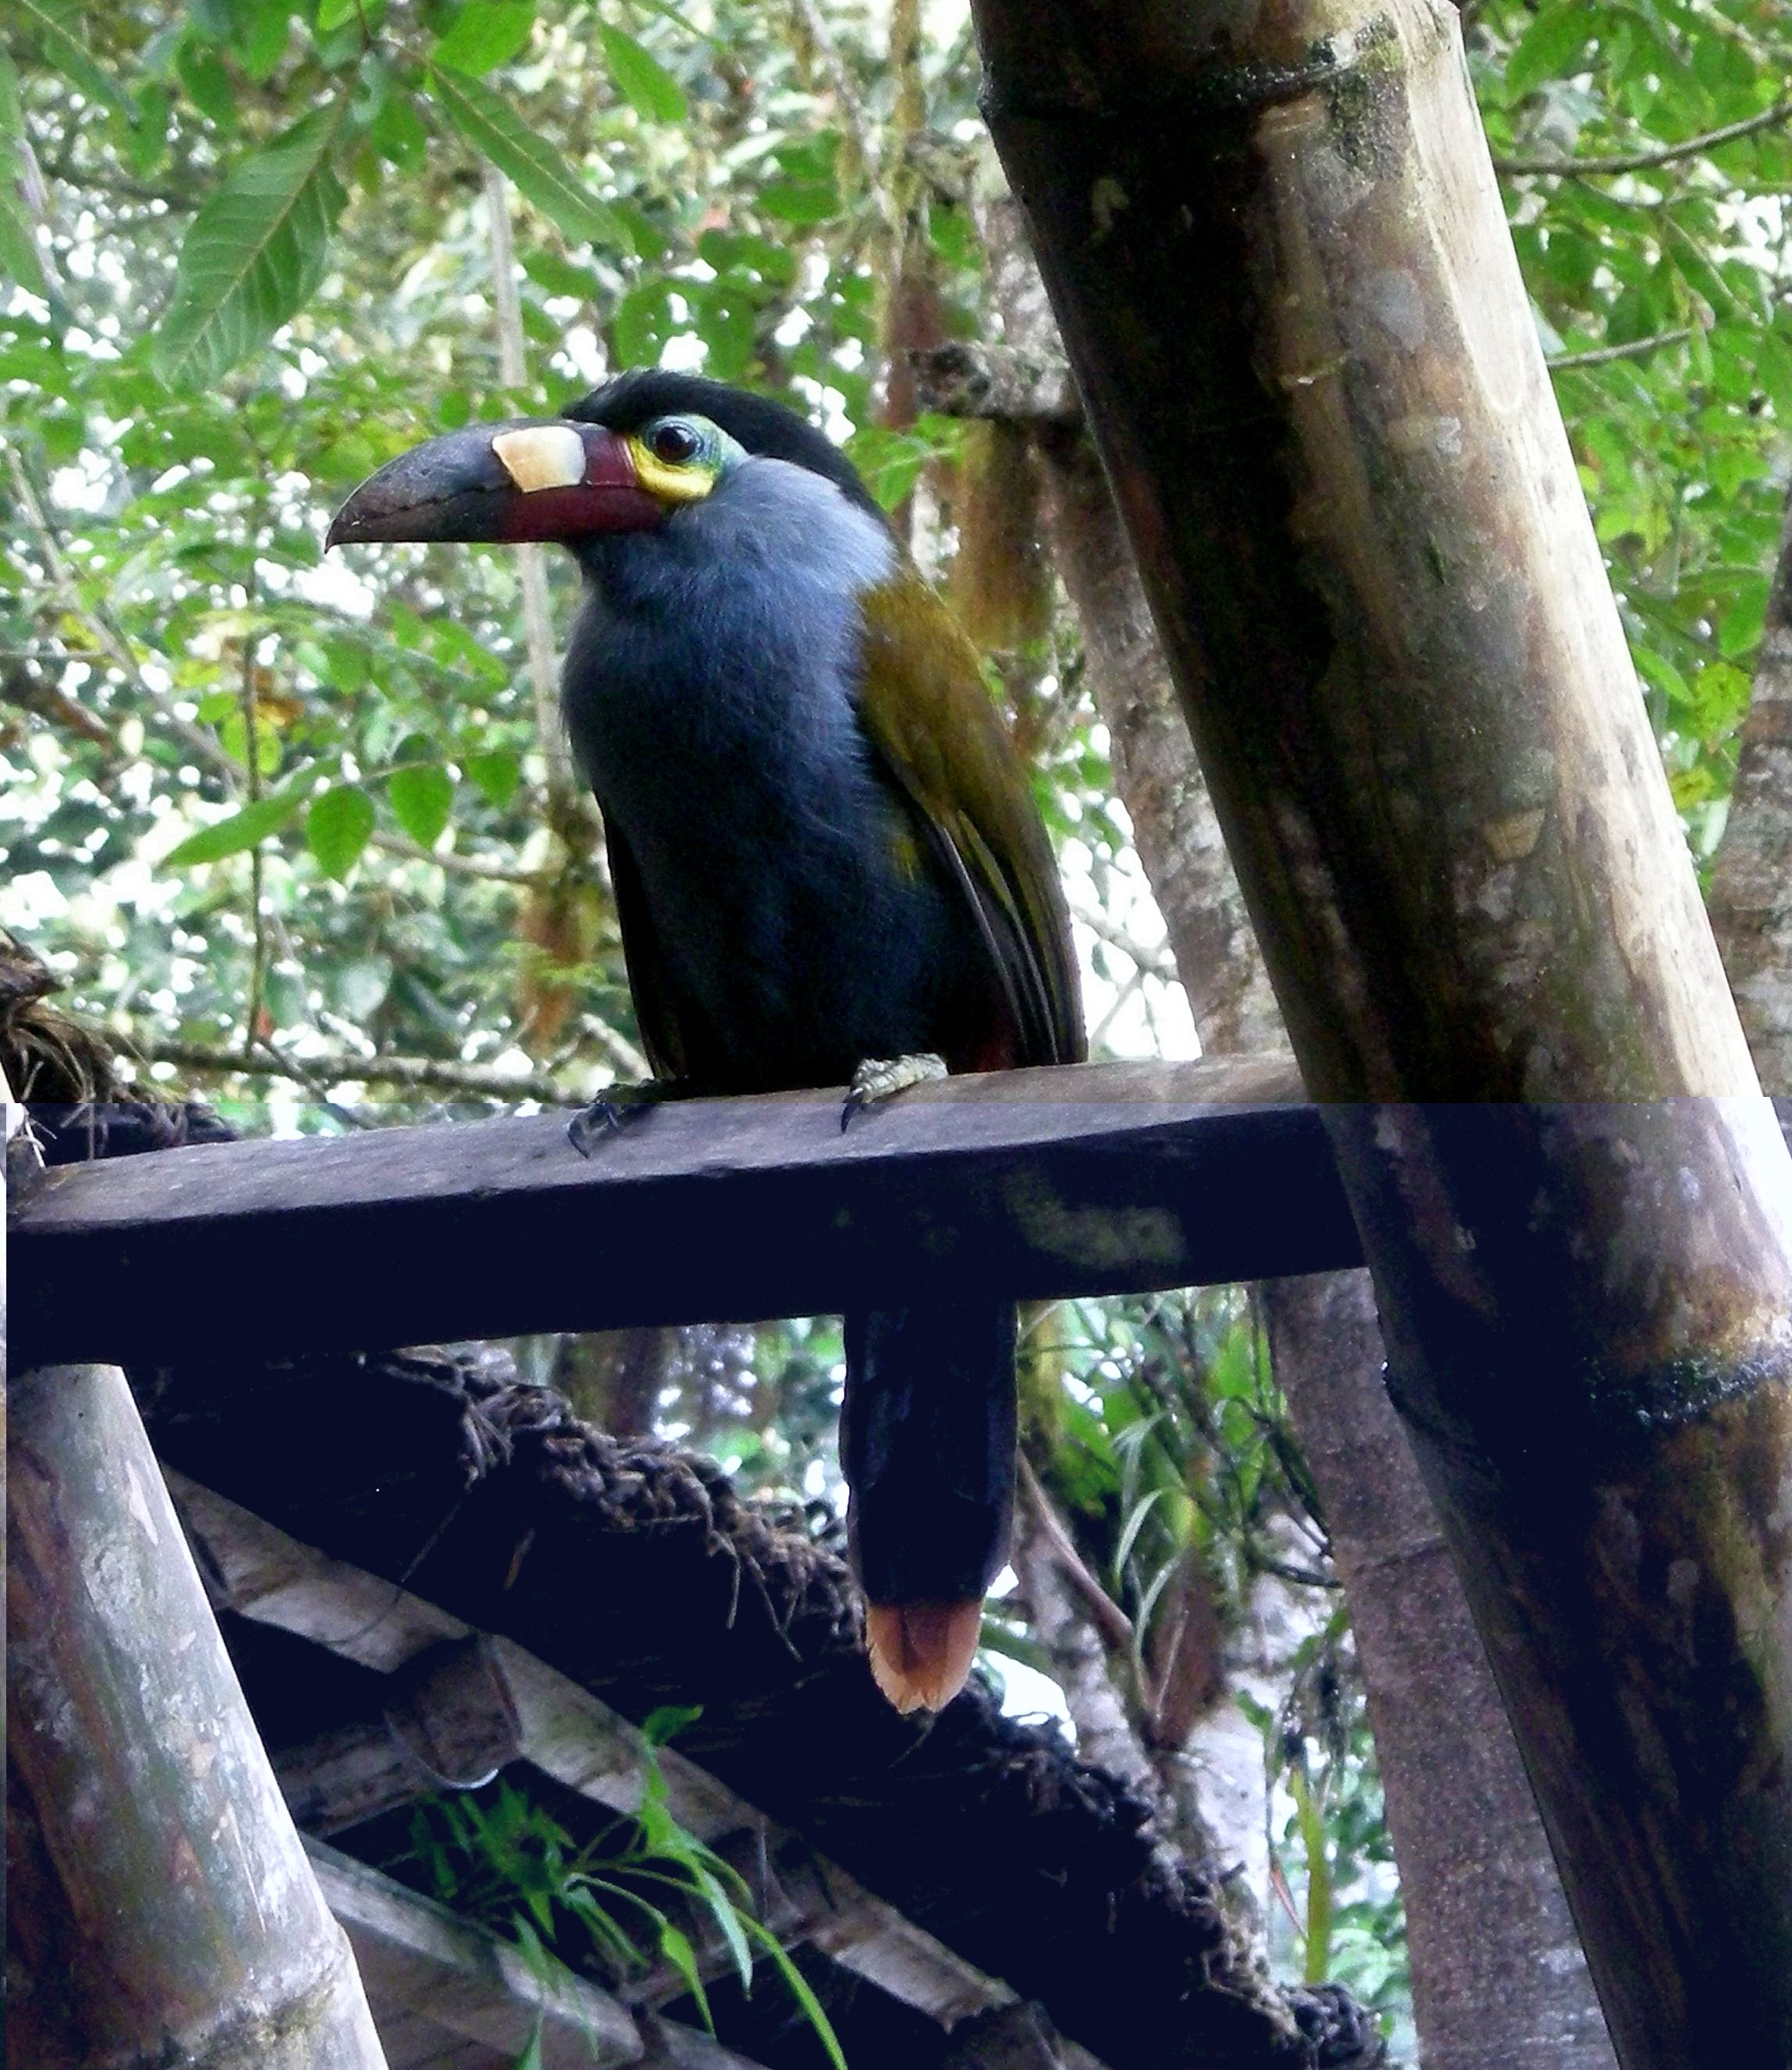 Birdwatching in Ecuador's Amazon rainforest